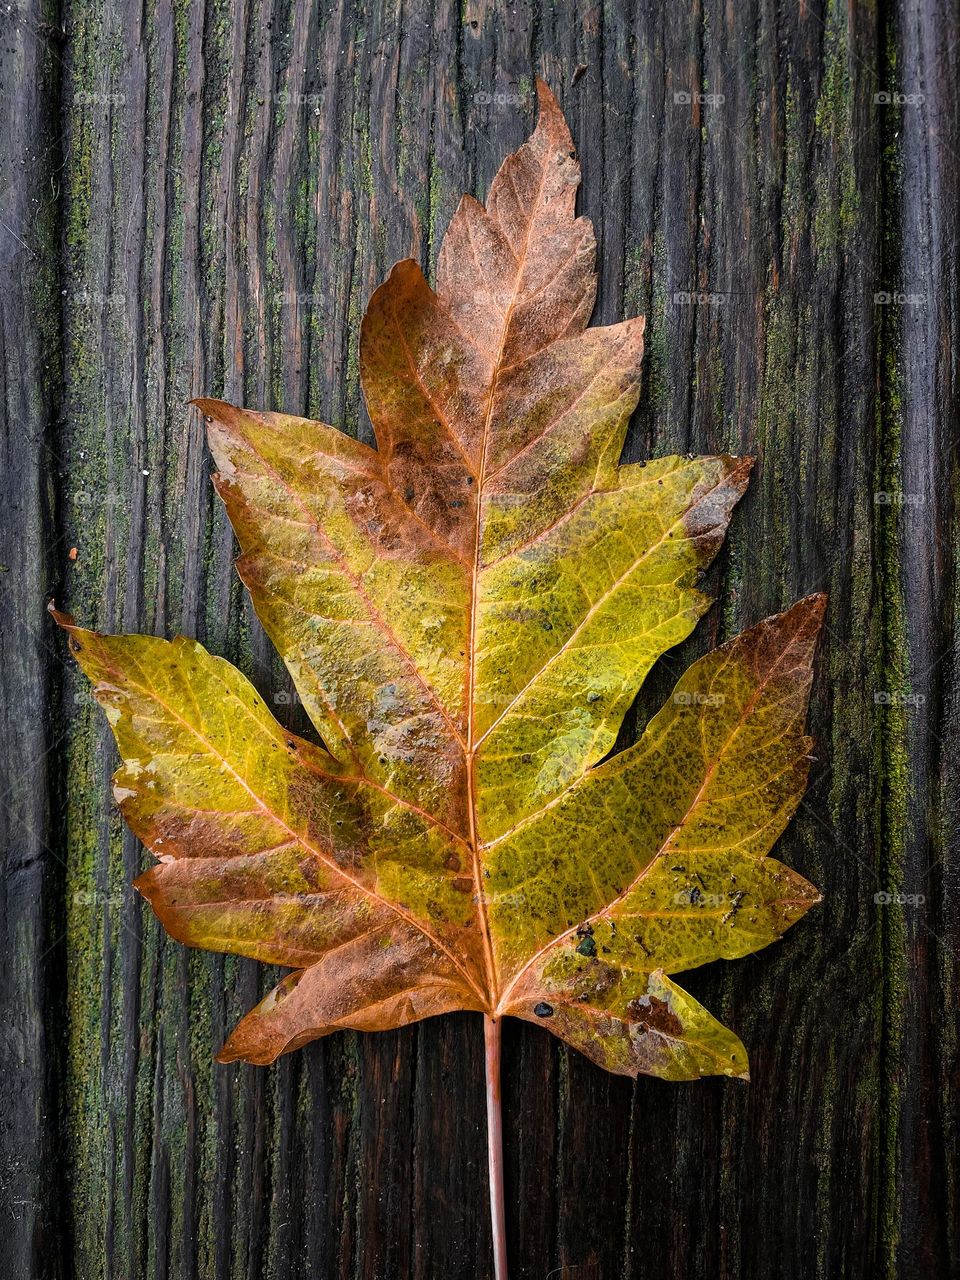 Leaf leaves moss wood grain texture sharp crisp autumn fall vibes wet mossy rustic 